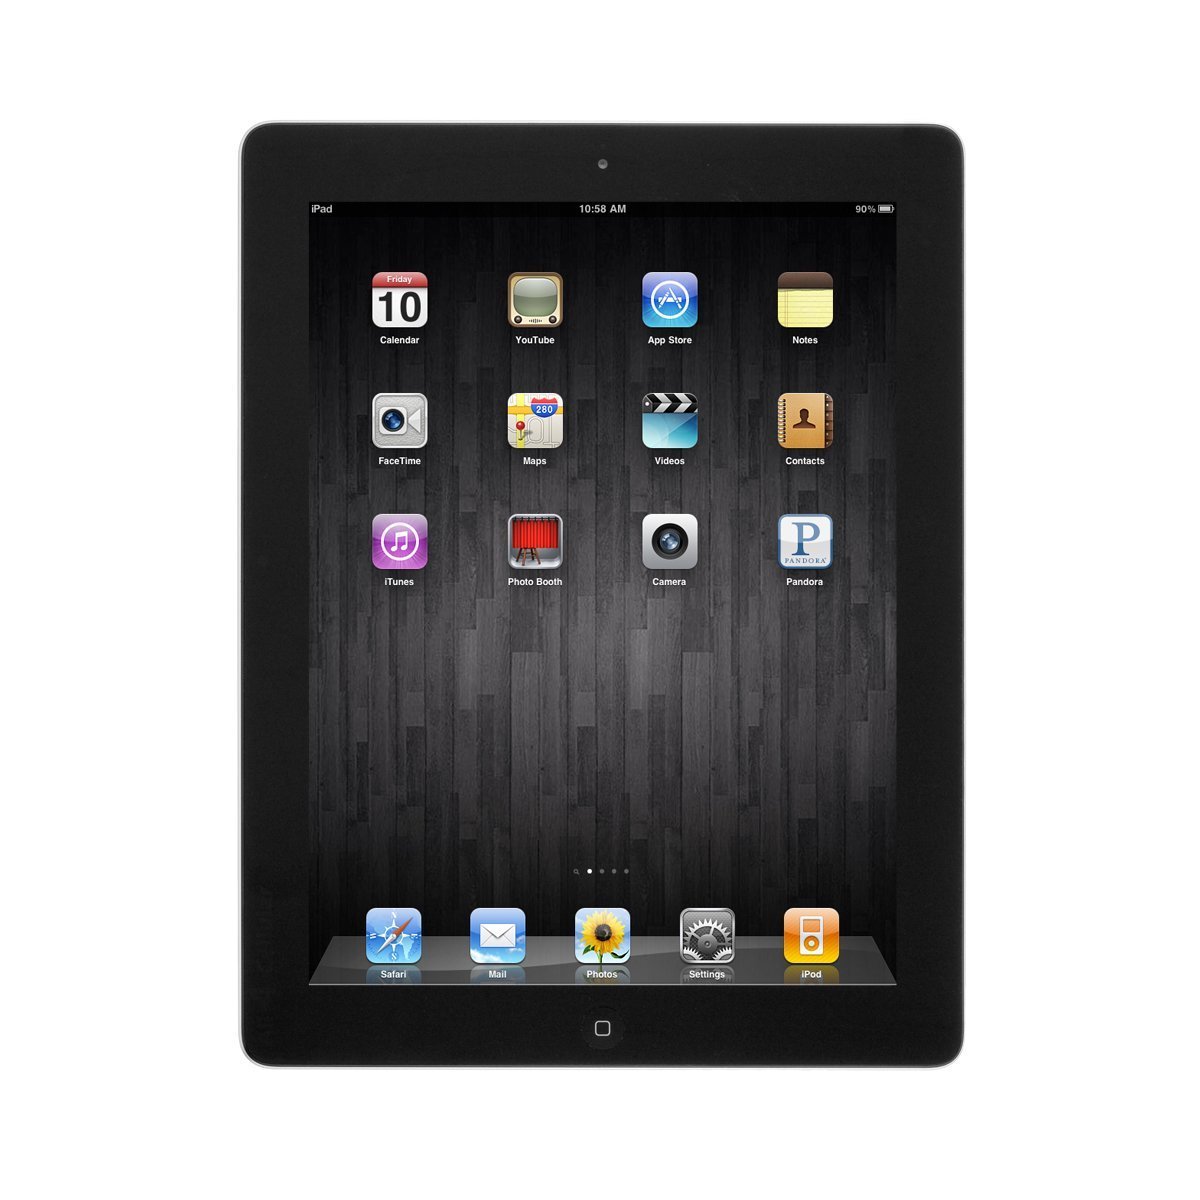 Apple iPad 4 16GB 9.7in Retina Display WiFi Bluetooth & Camera - Black -  4th Gen (Refurbished)